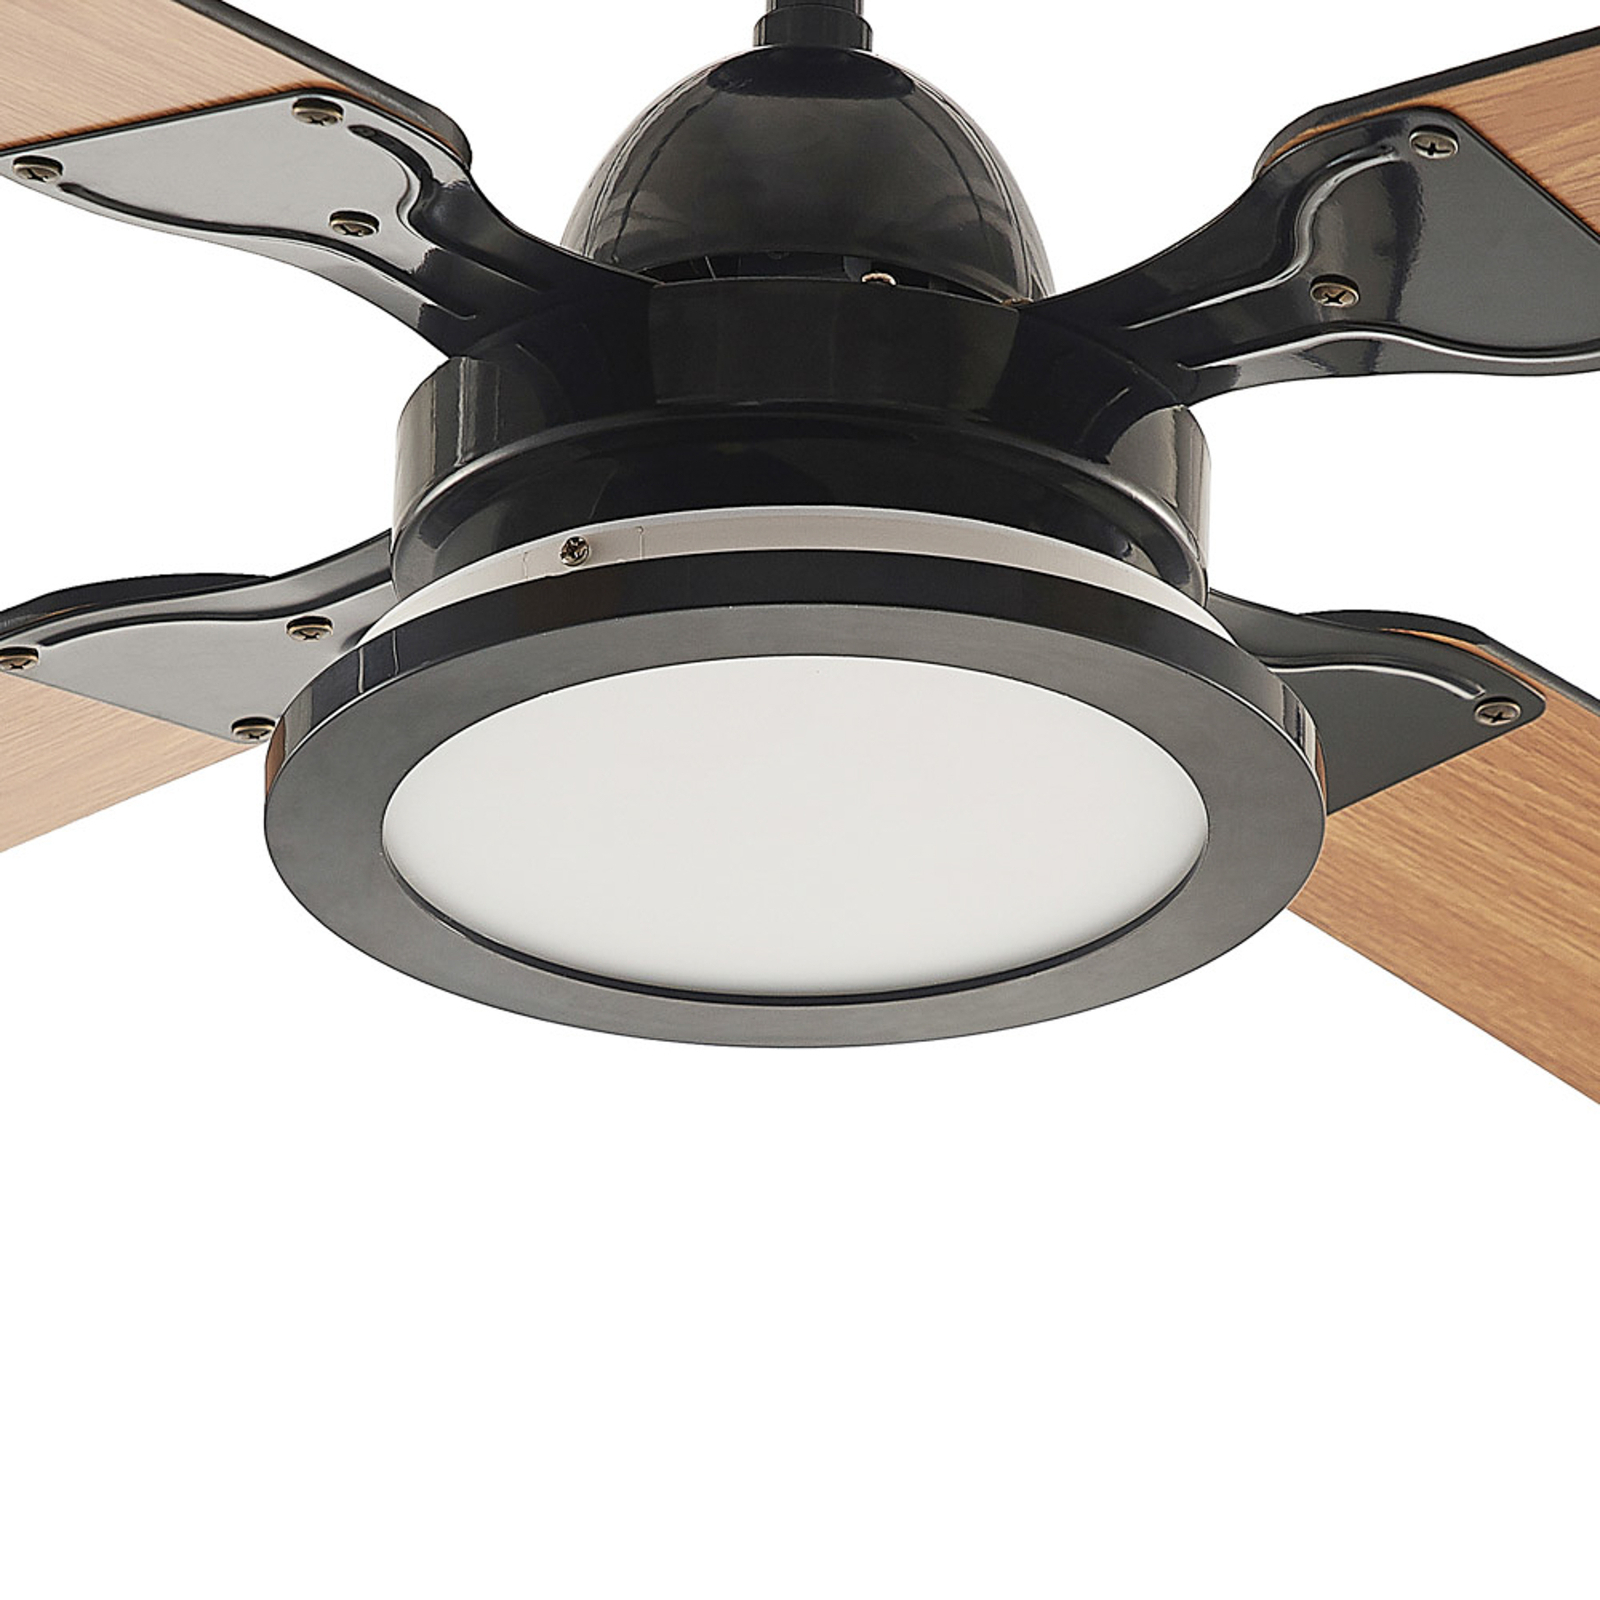 Starluna LED ceiling fan Tedric, black, quiet, 133 cm